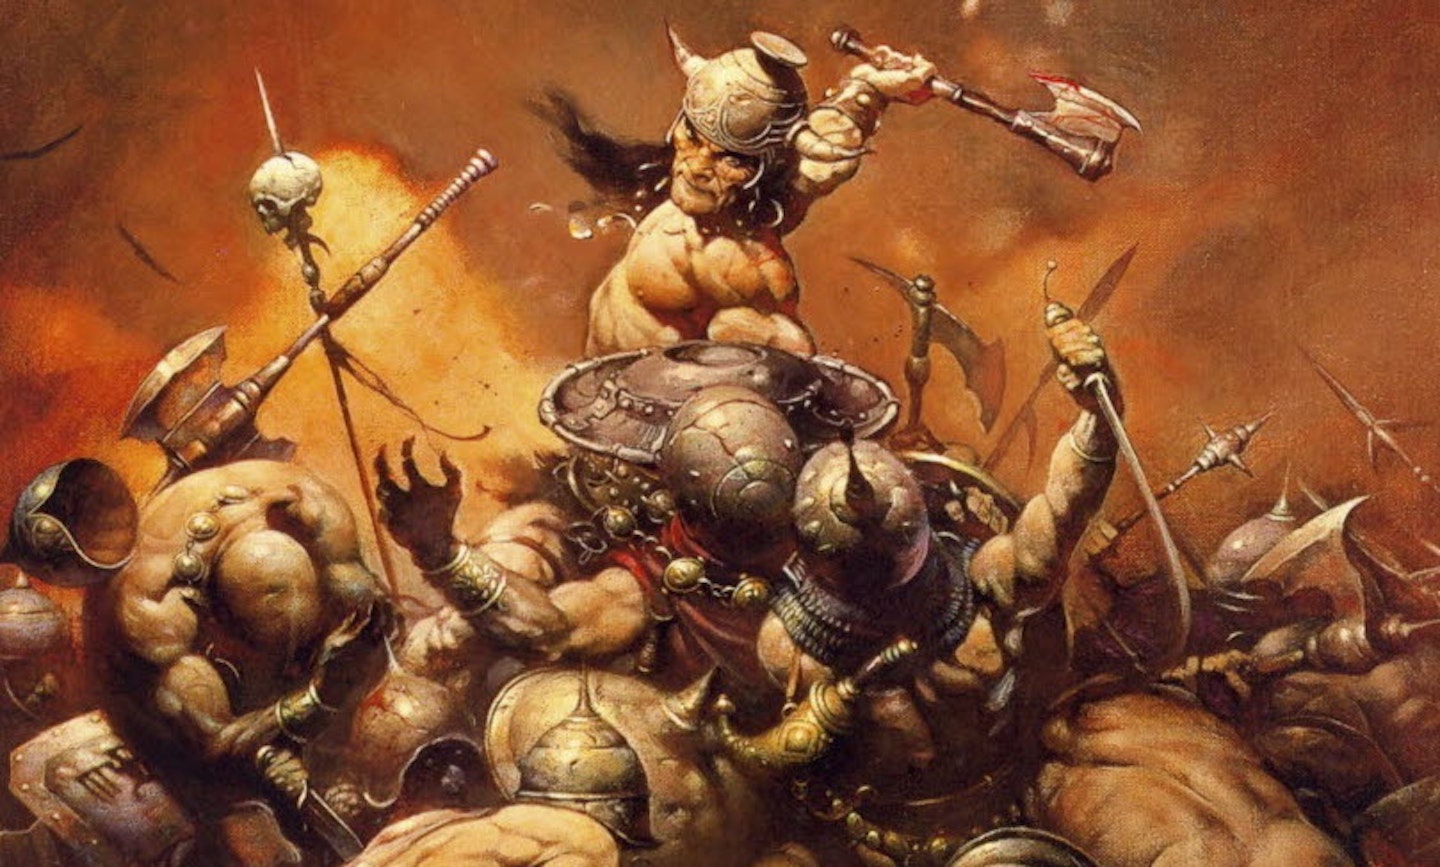 Conan the Destroyer by Frank Frazetta